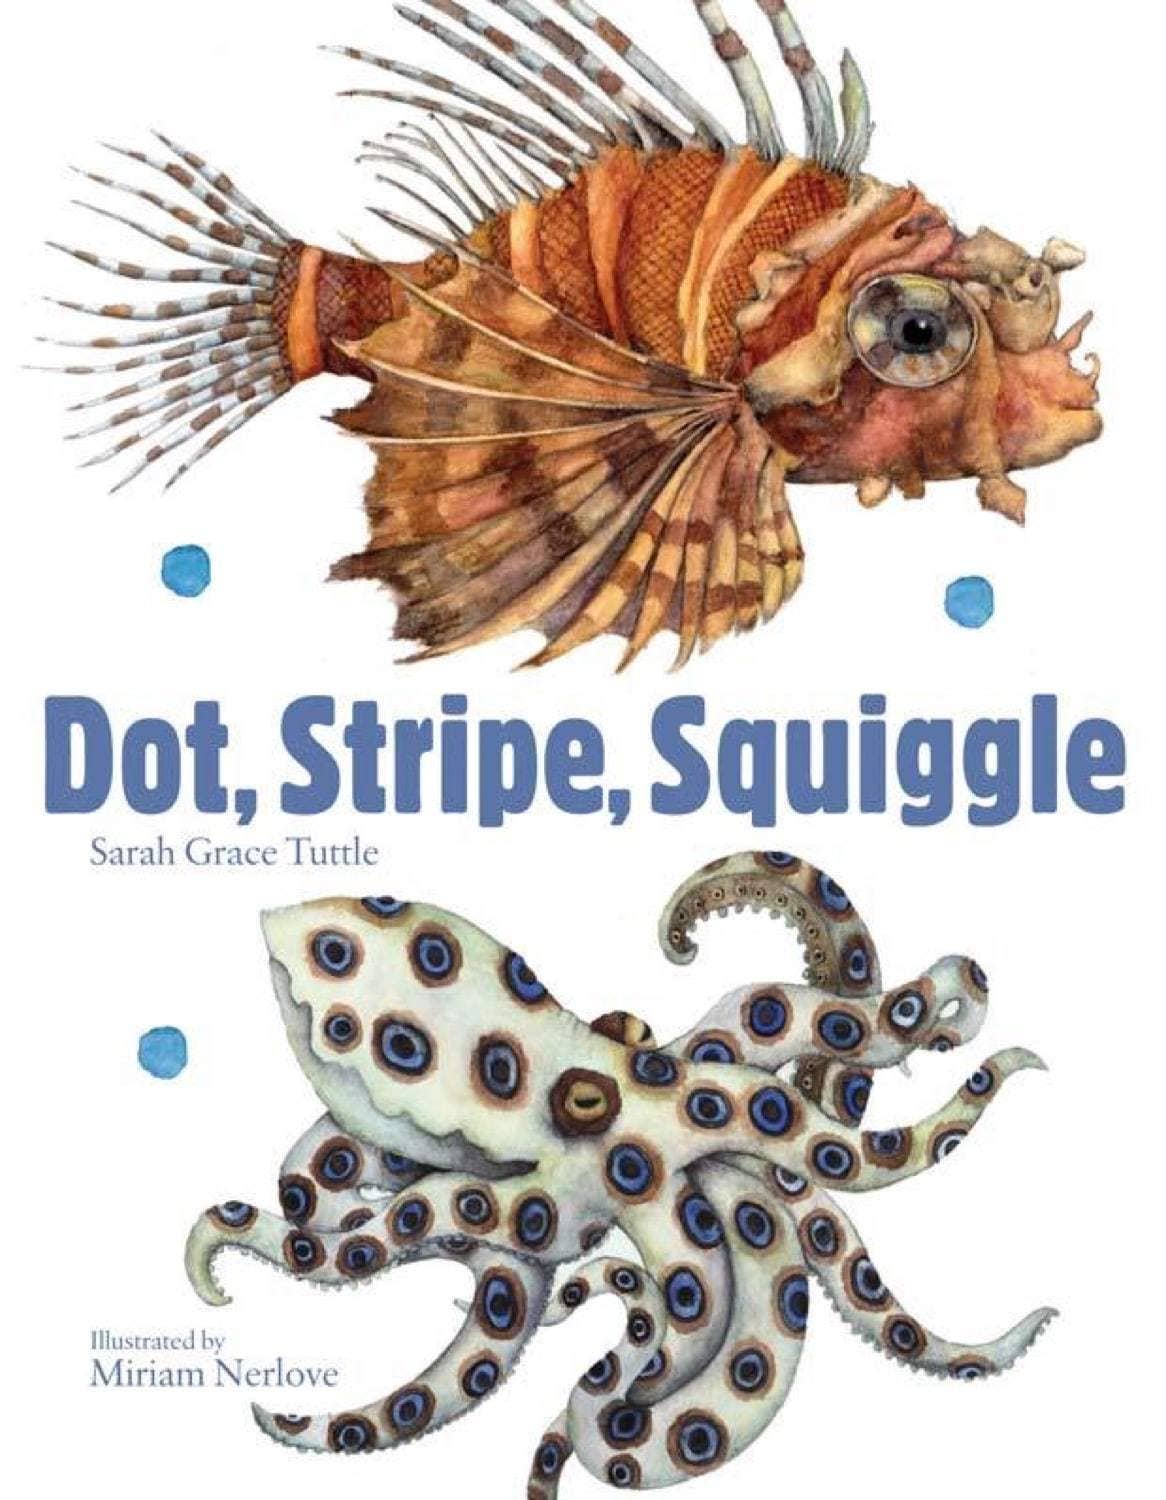 Dot, stripe, squiggle book